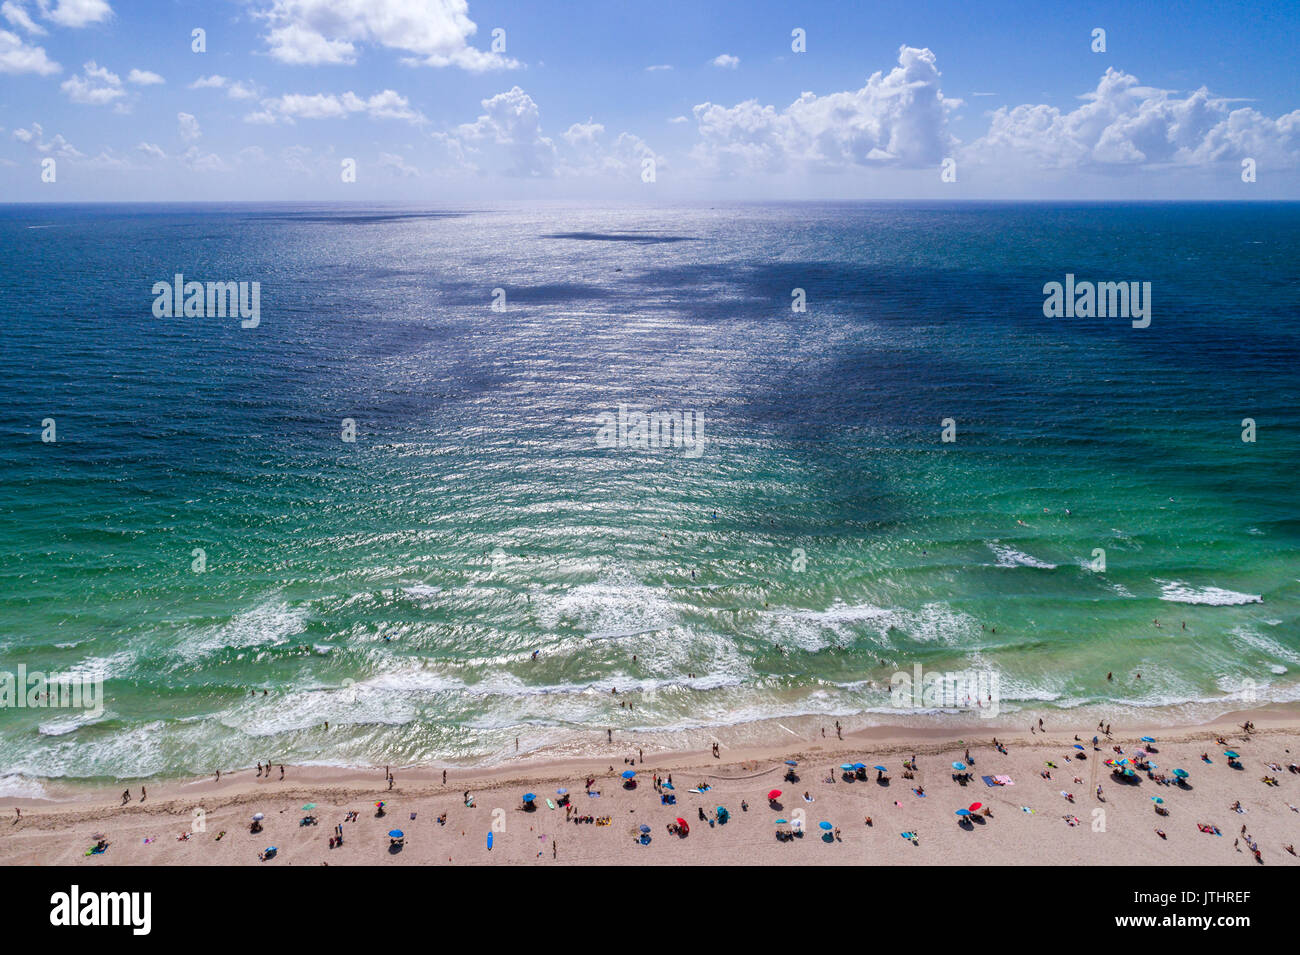 Miami Beach Florida, vista aérea desde arriba, vista desde arriba, vista desde arriba, Océano Atlántico, arena, baños de sol, FL17080604d Foto de stock